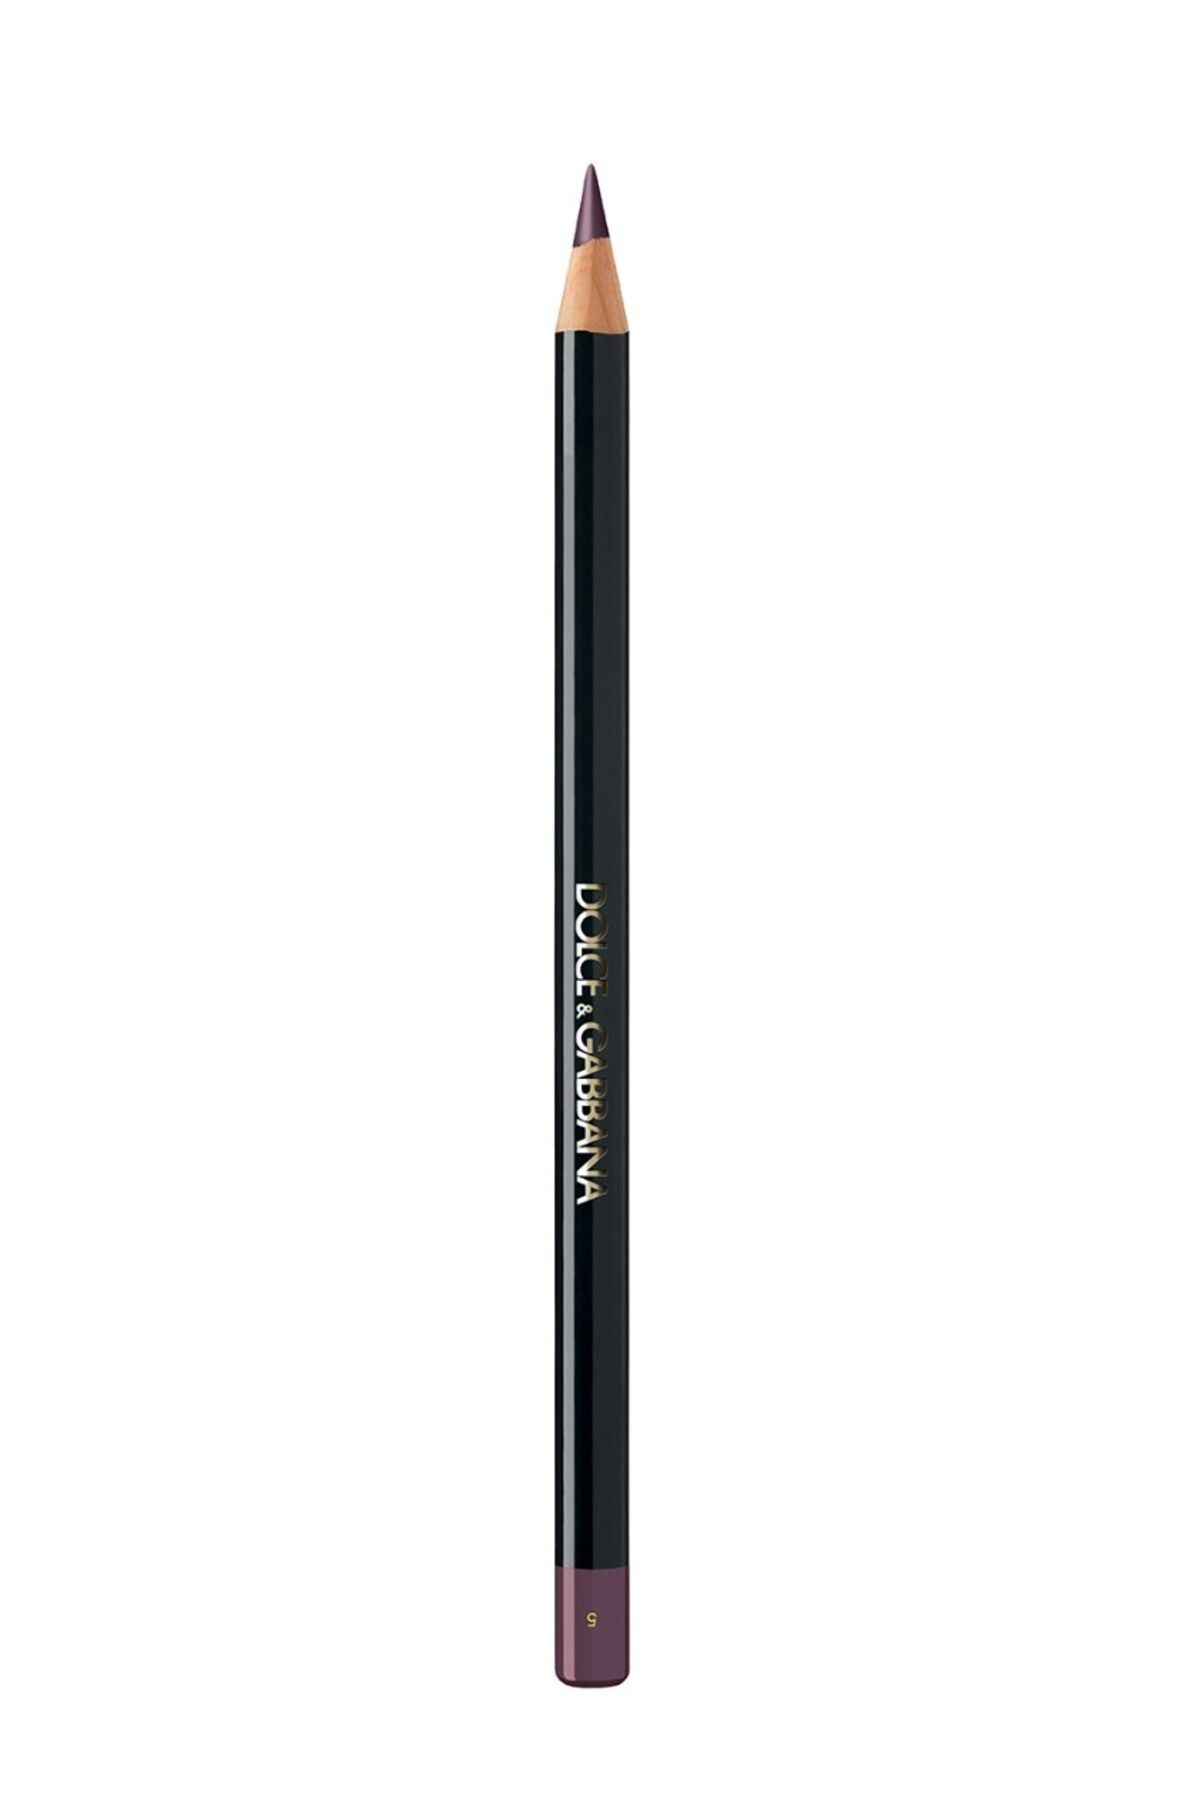 Dolce &Gabbana The Khol Pencil 5 Dahlia